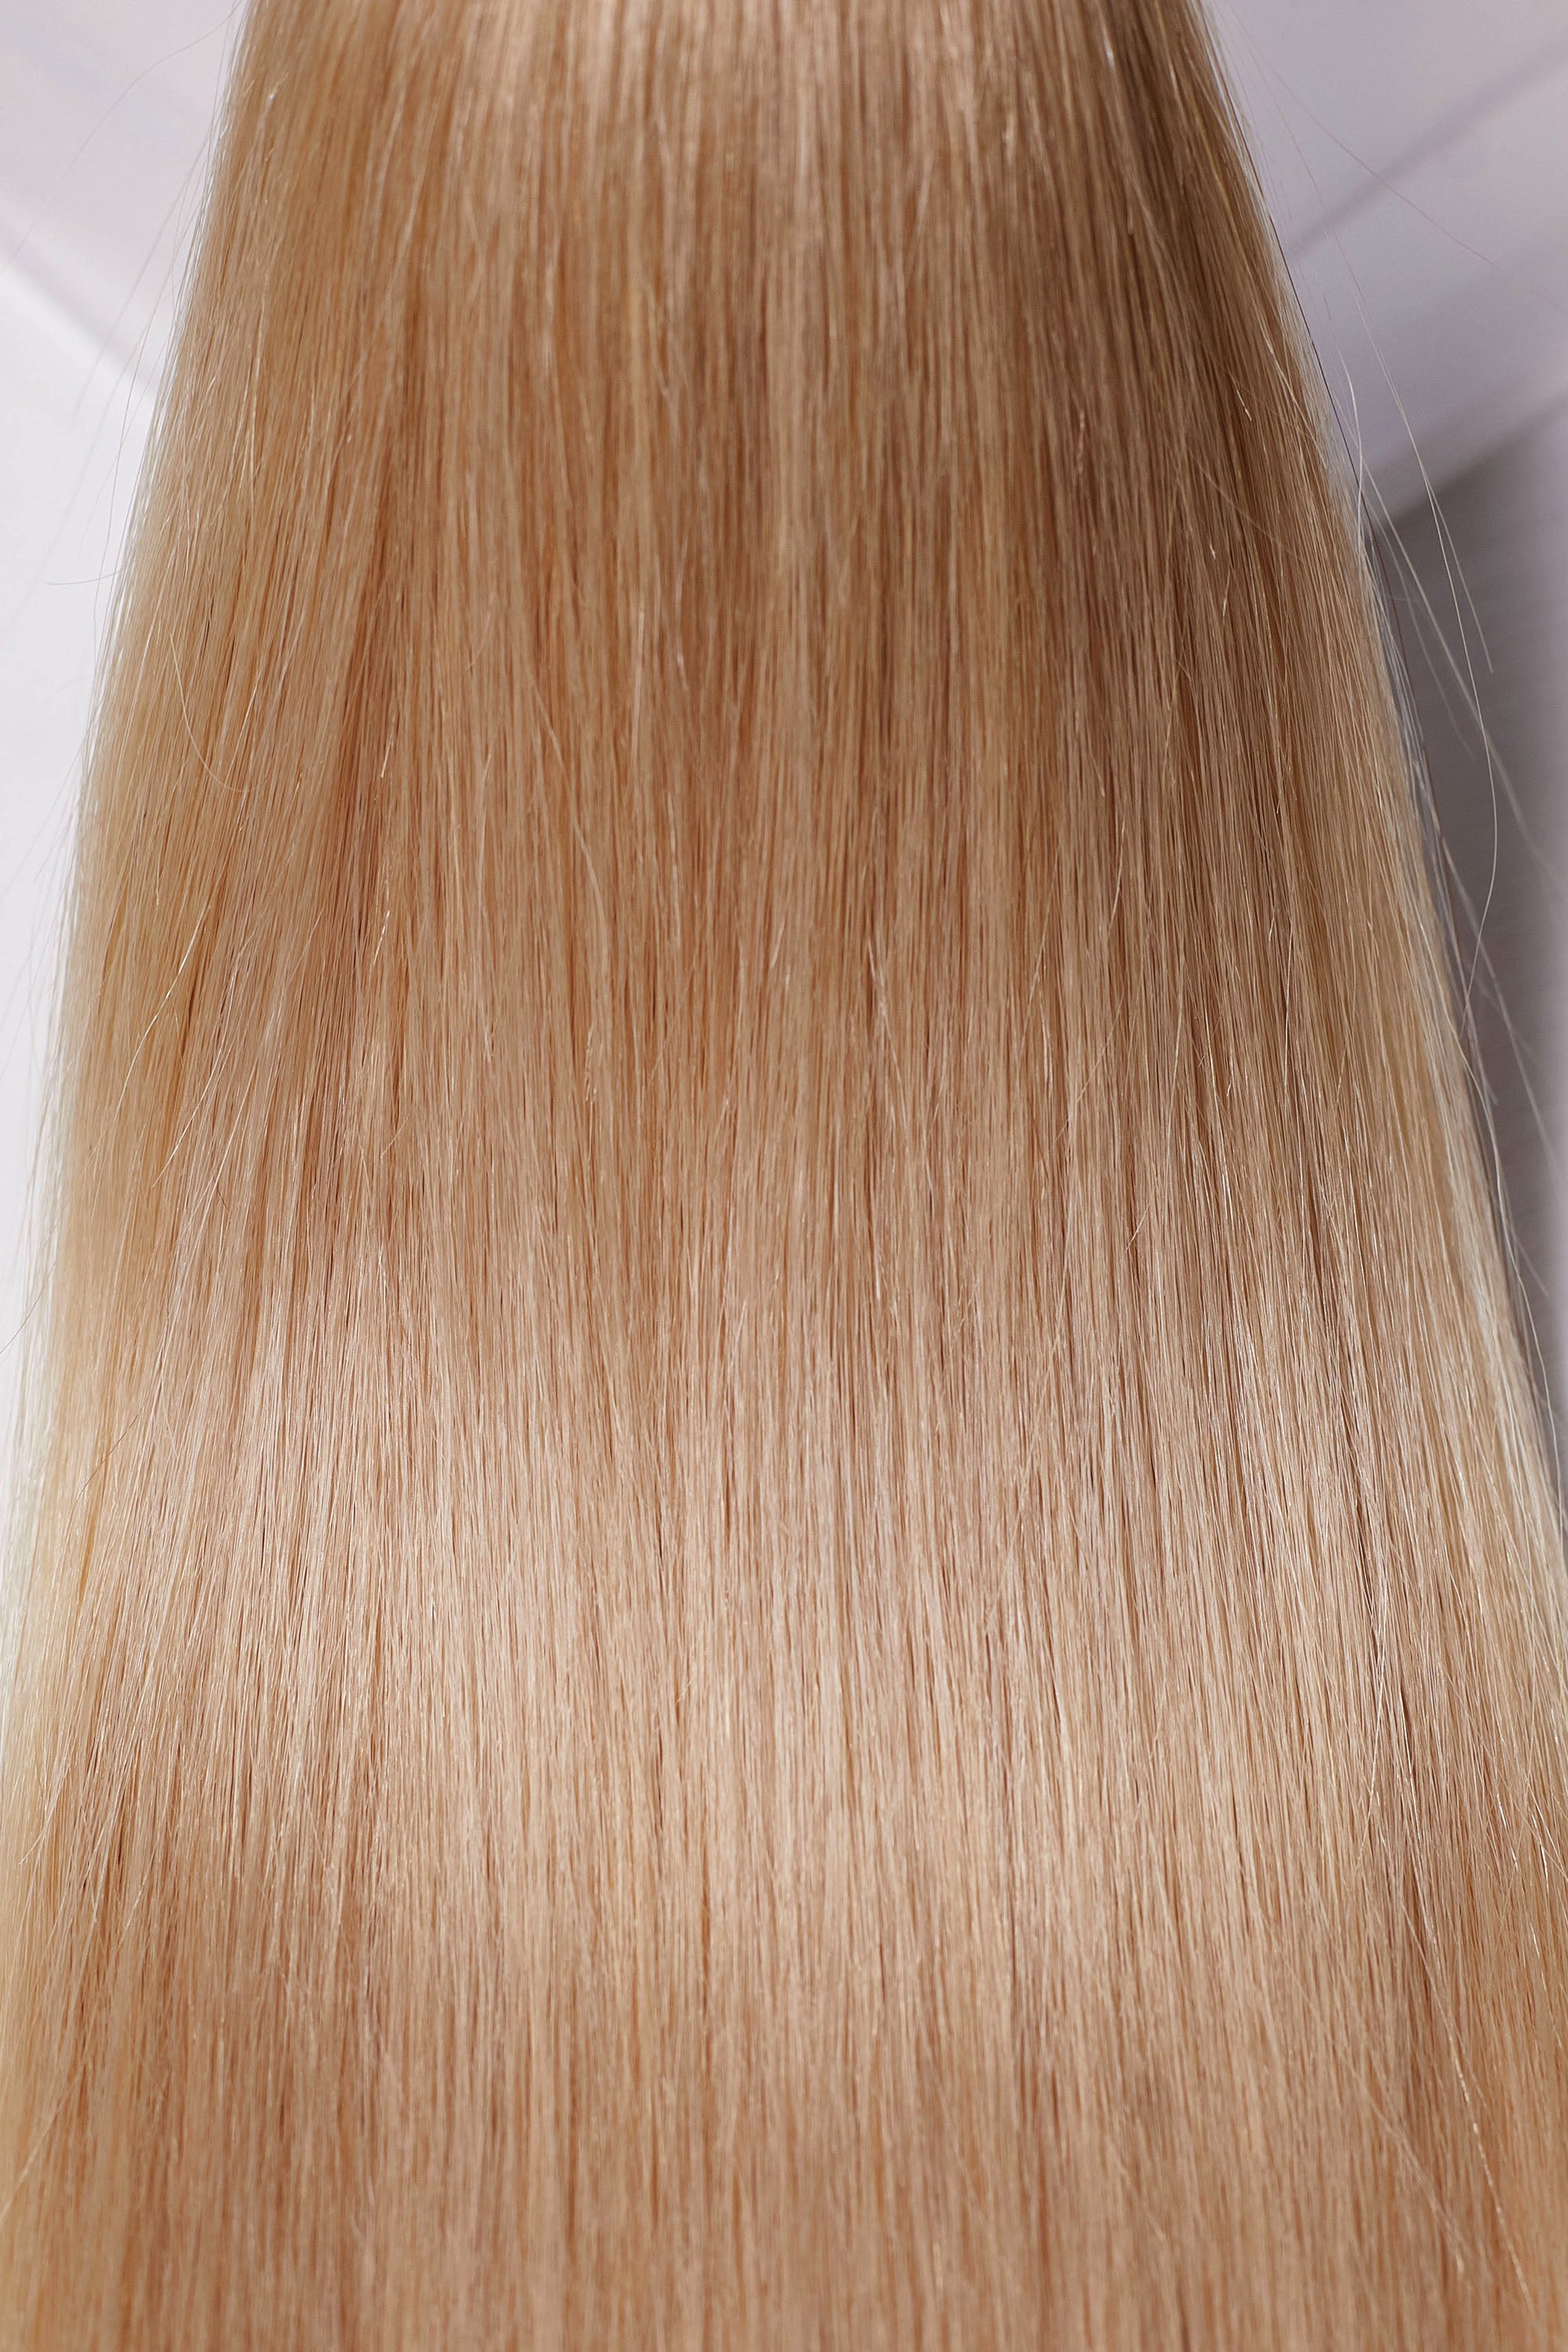 Behair professional Keratin Tip "Premium" 20" (50cm) Natural Straight Light Gold Sand #16 - 25g (Standart - 0.7g each pcs) hair extensions